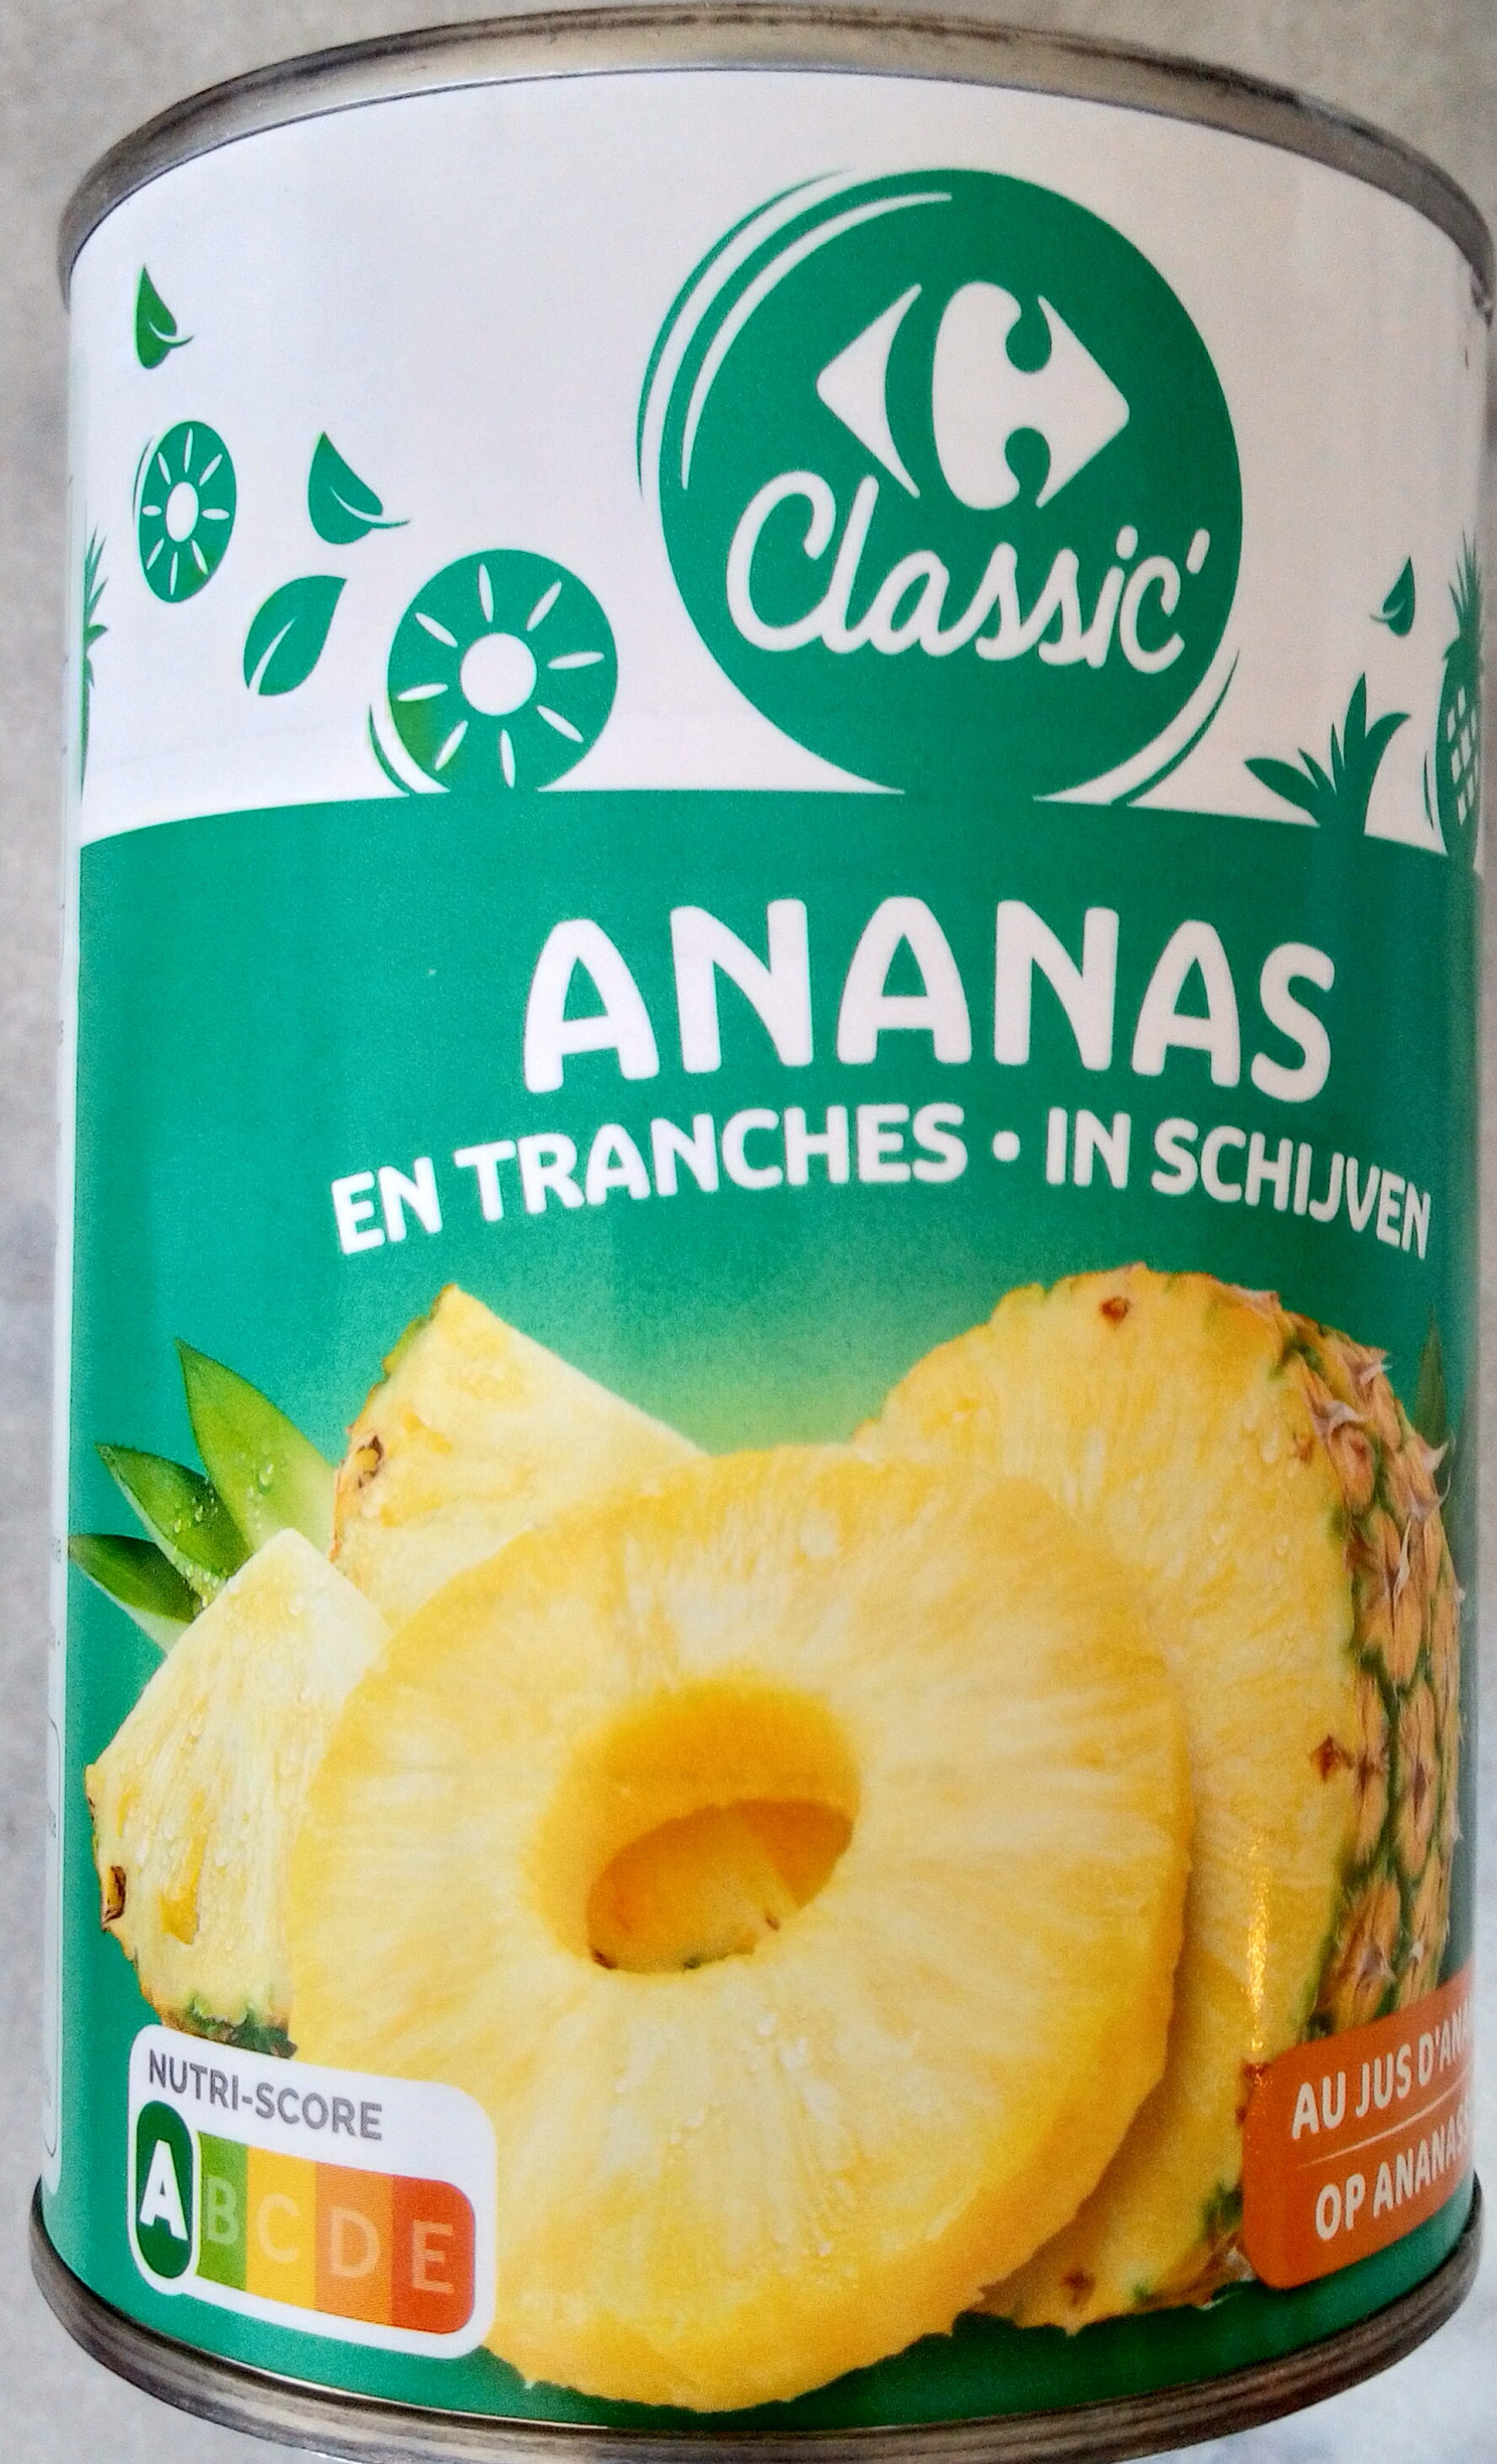 Ananas en tranches au jus d'ananas - Producte - fr